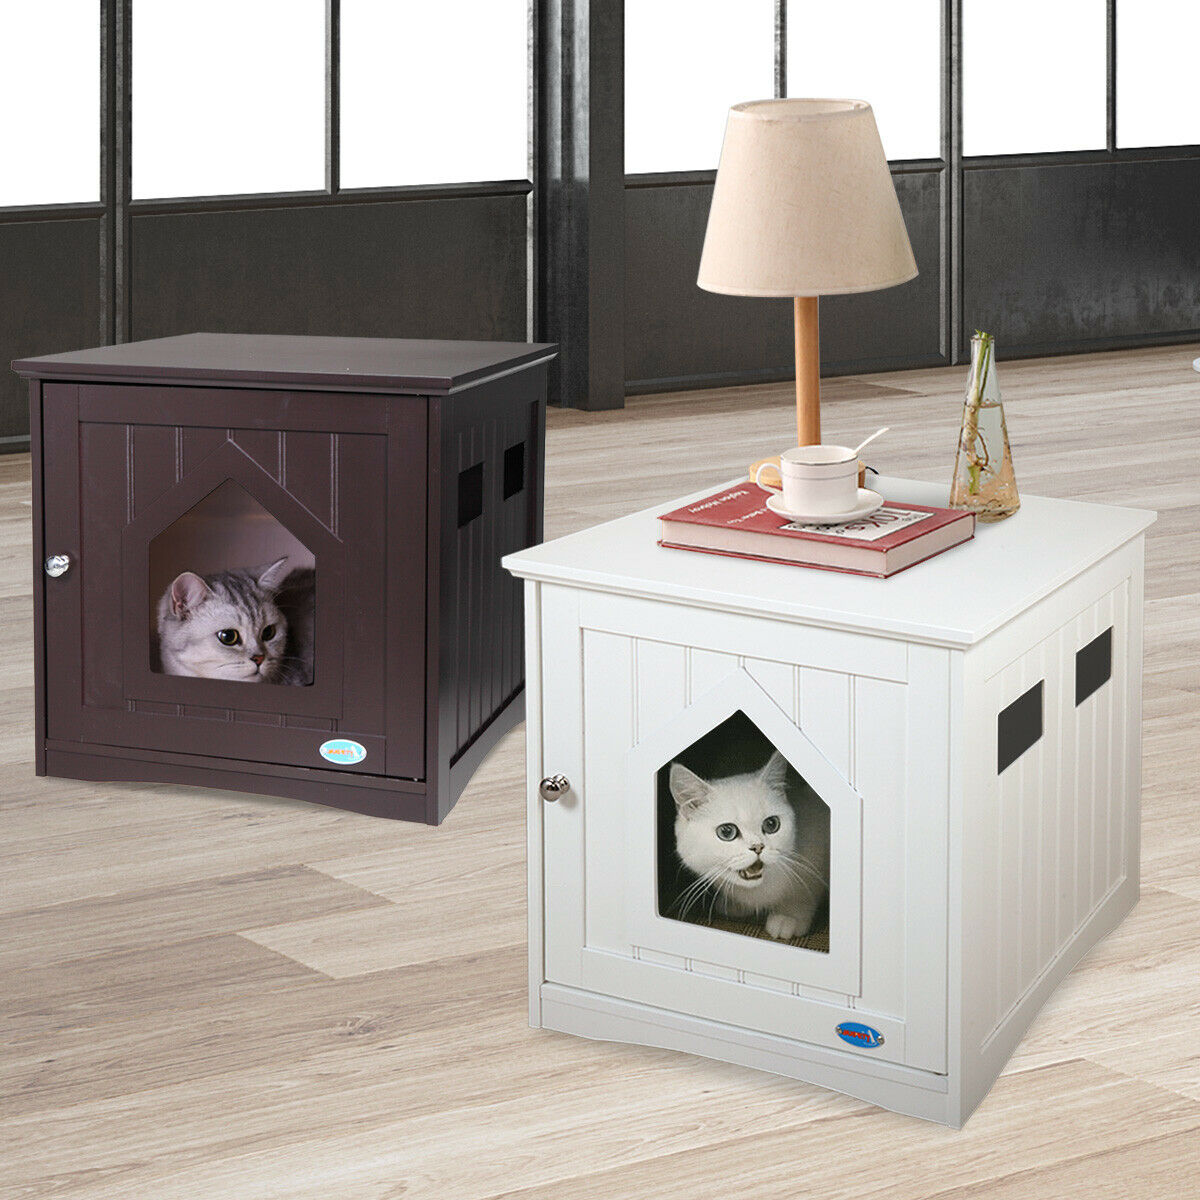 Pet Cat Hidden Litter Box Furniture Nightstand End Table Enclosure Shelter House